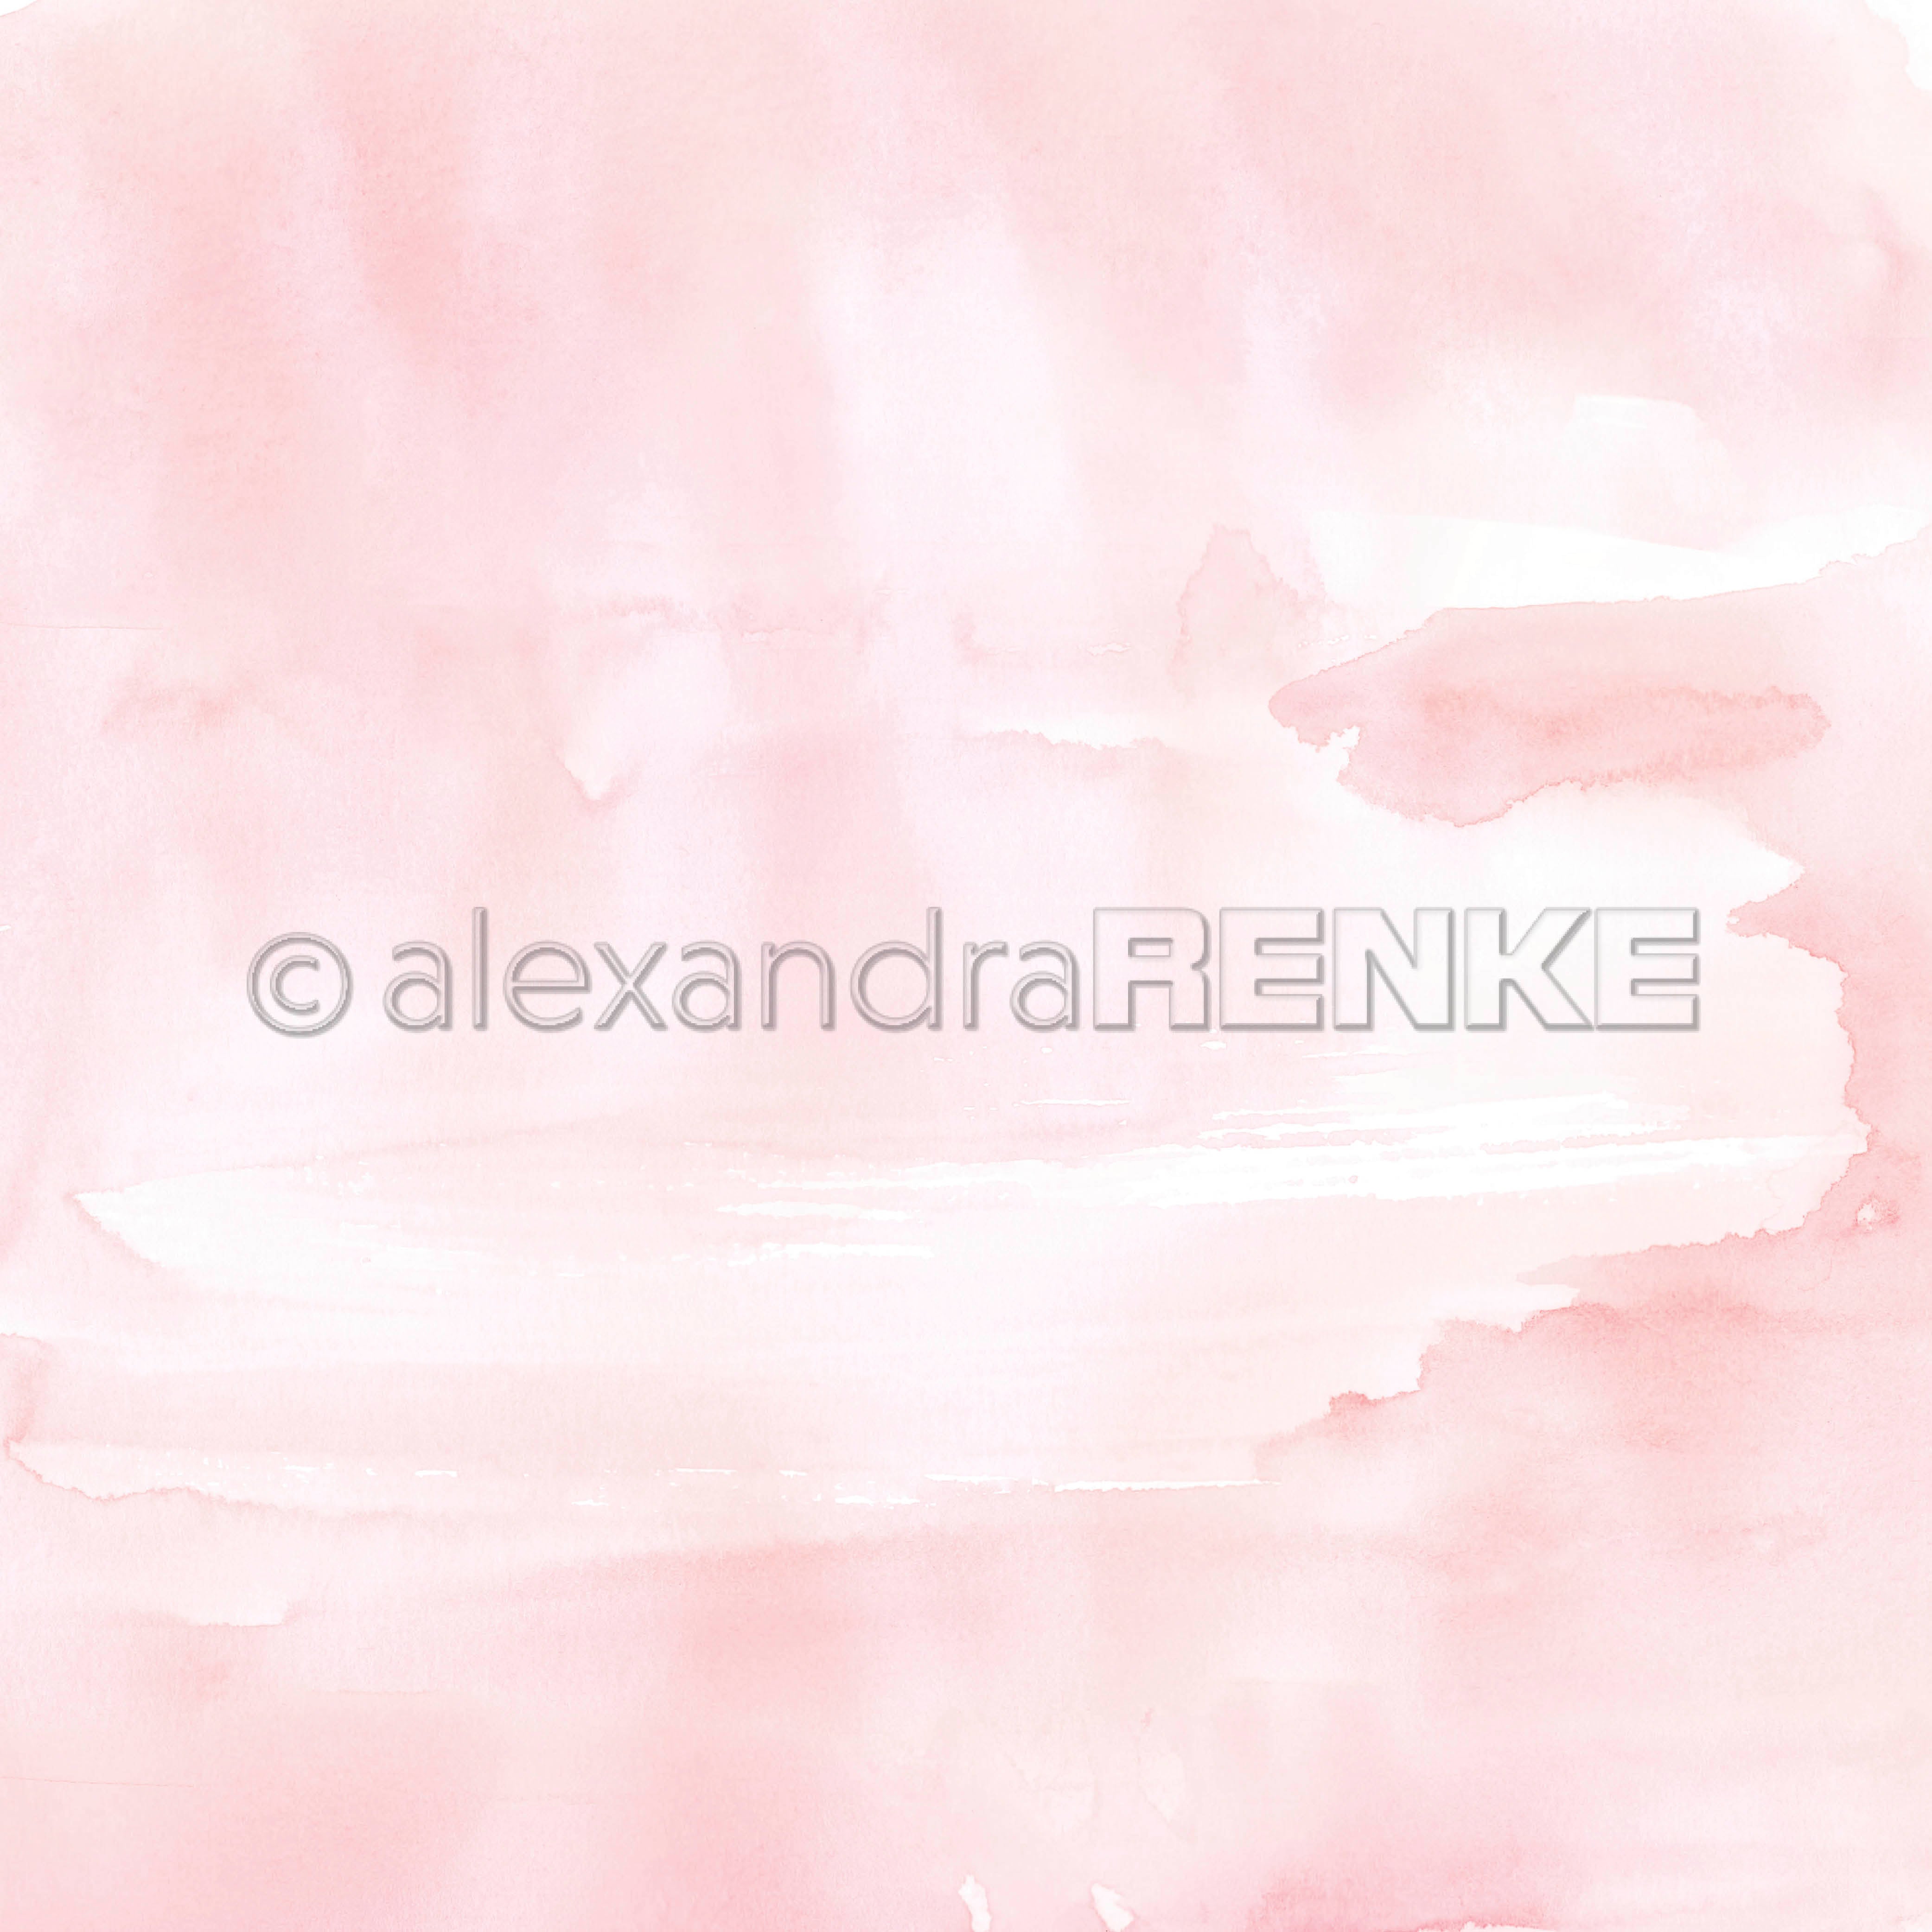 Alexandra Renke - Freestyle watercolor salmon pink - 12 x 12"